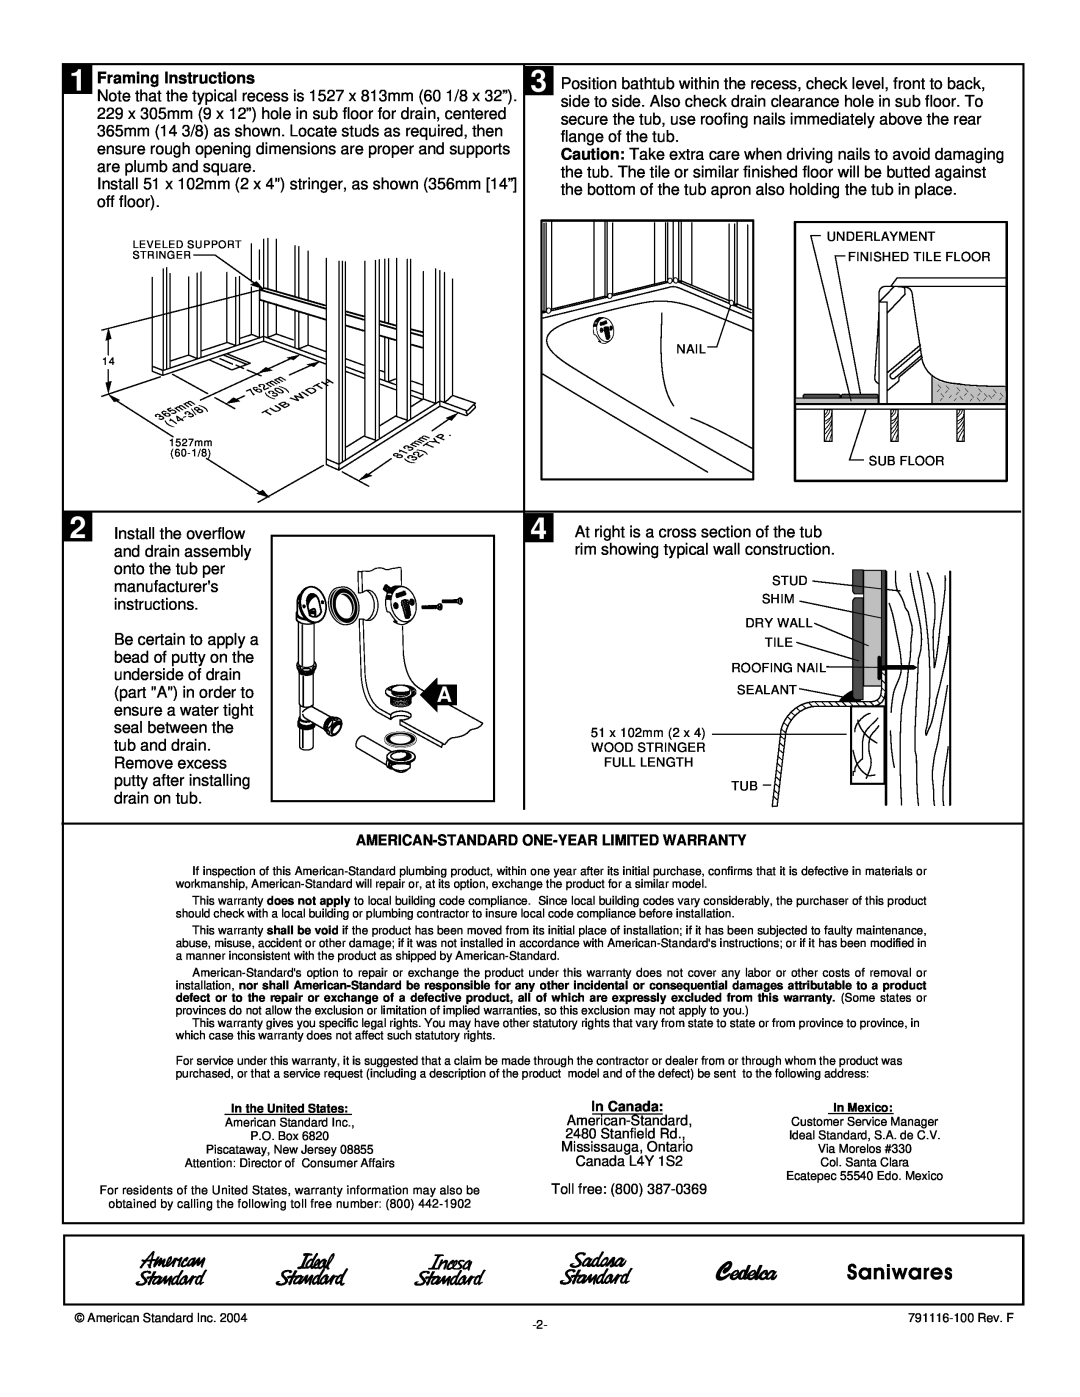 American Standard 155, 153 installation instructions Saniwares, Framing Instructions 